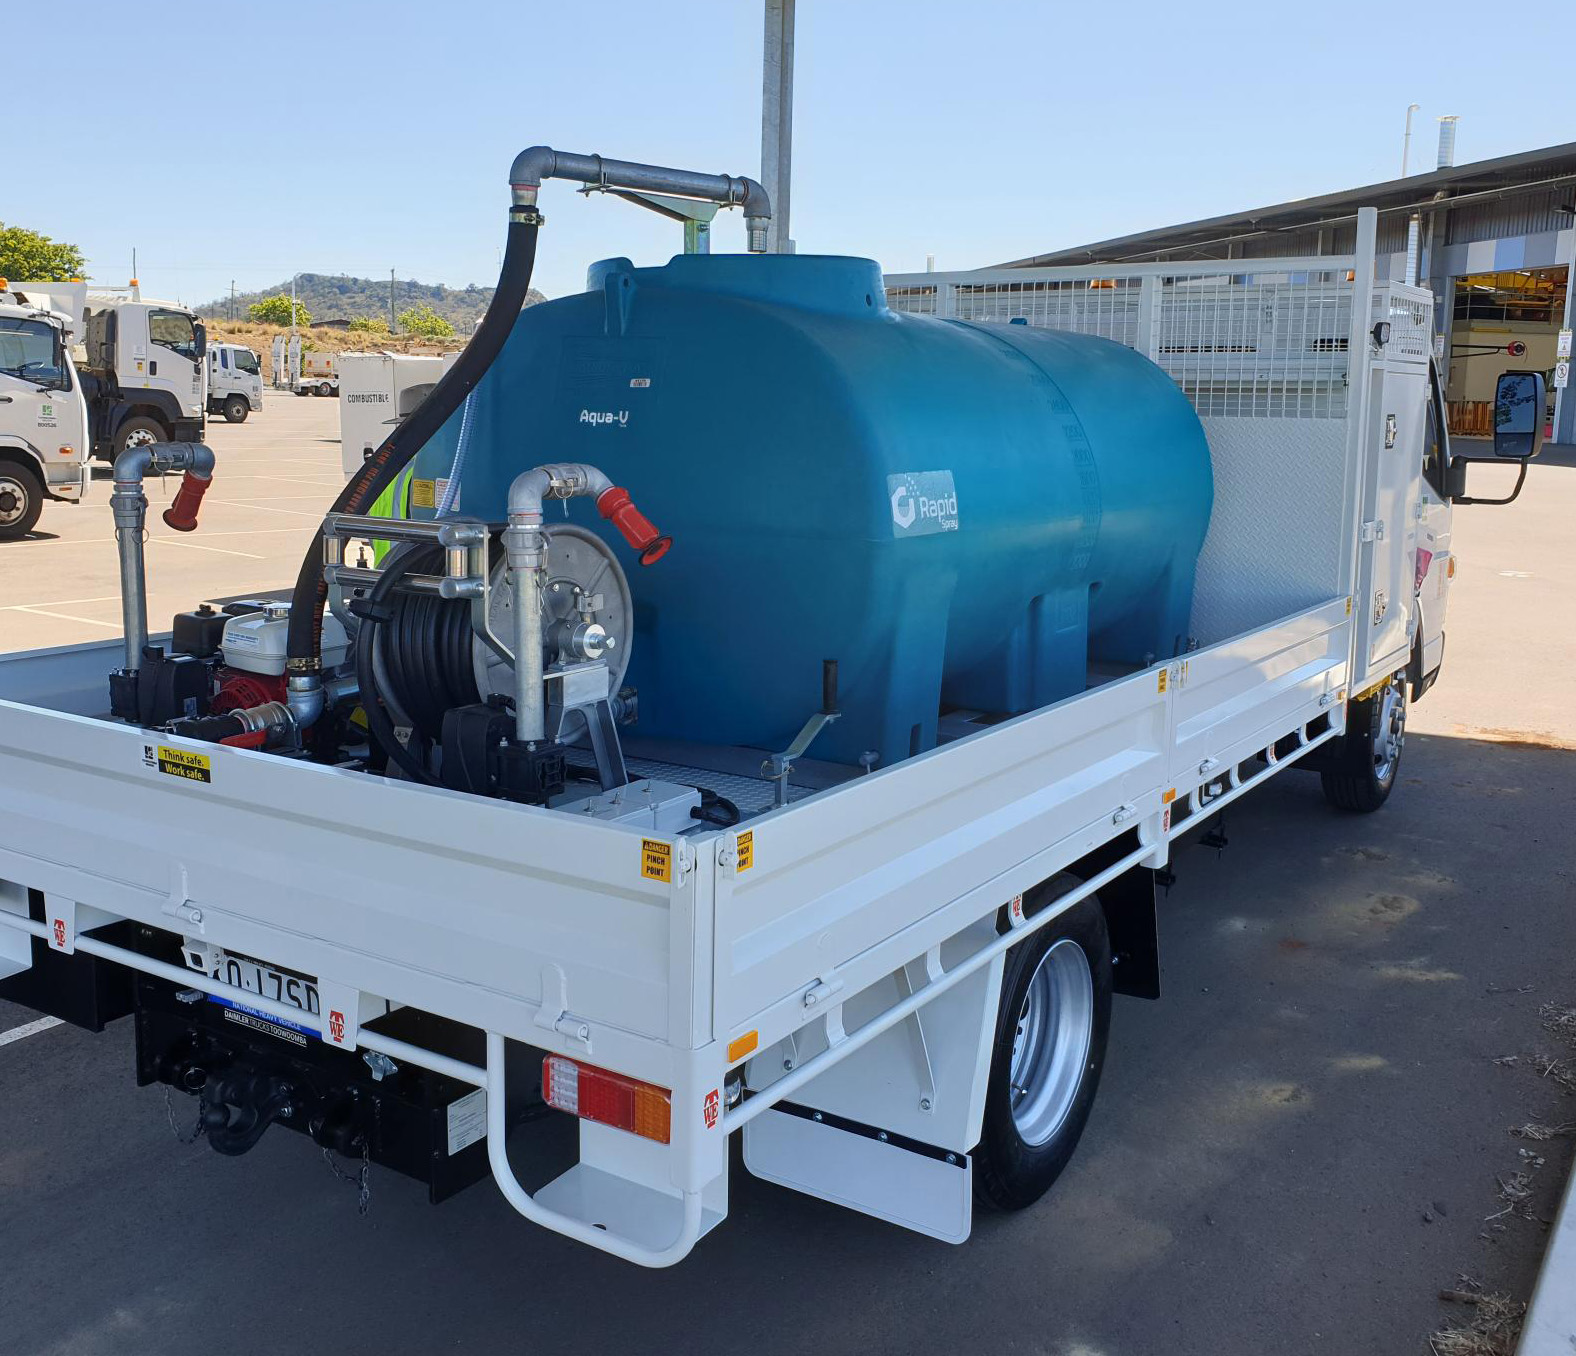 rapid-spray-engineering-toowoomba-regional-council-s-aquamax-unit